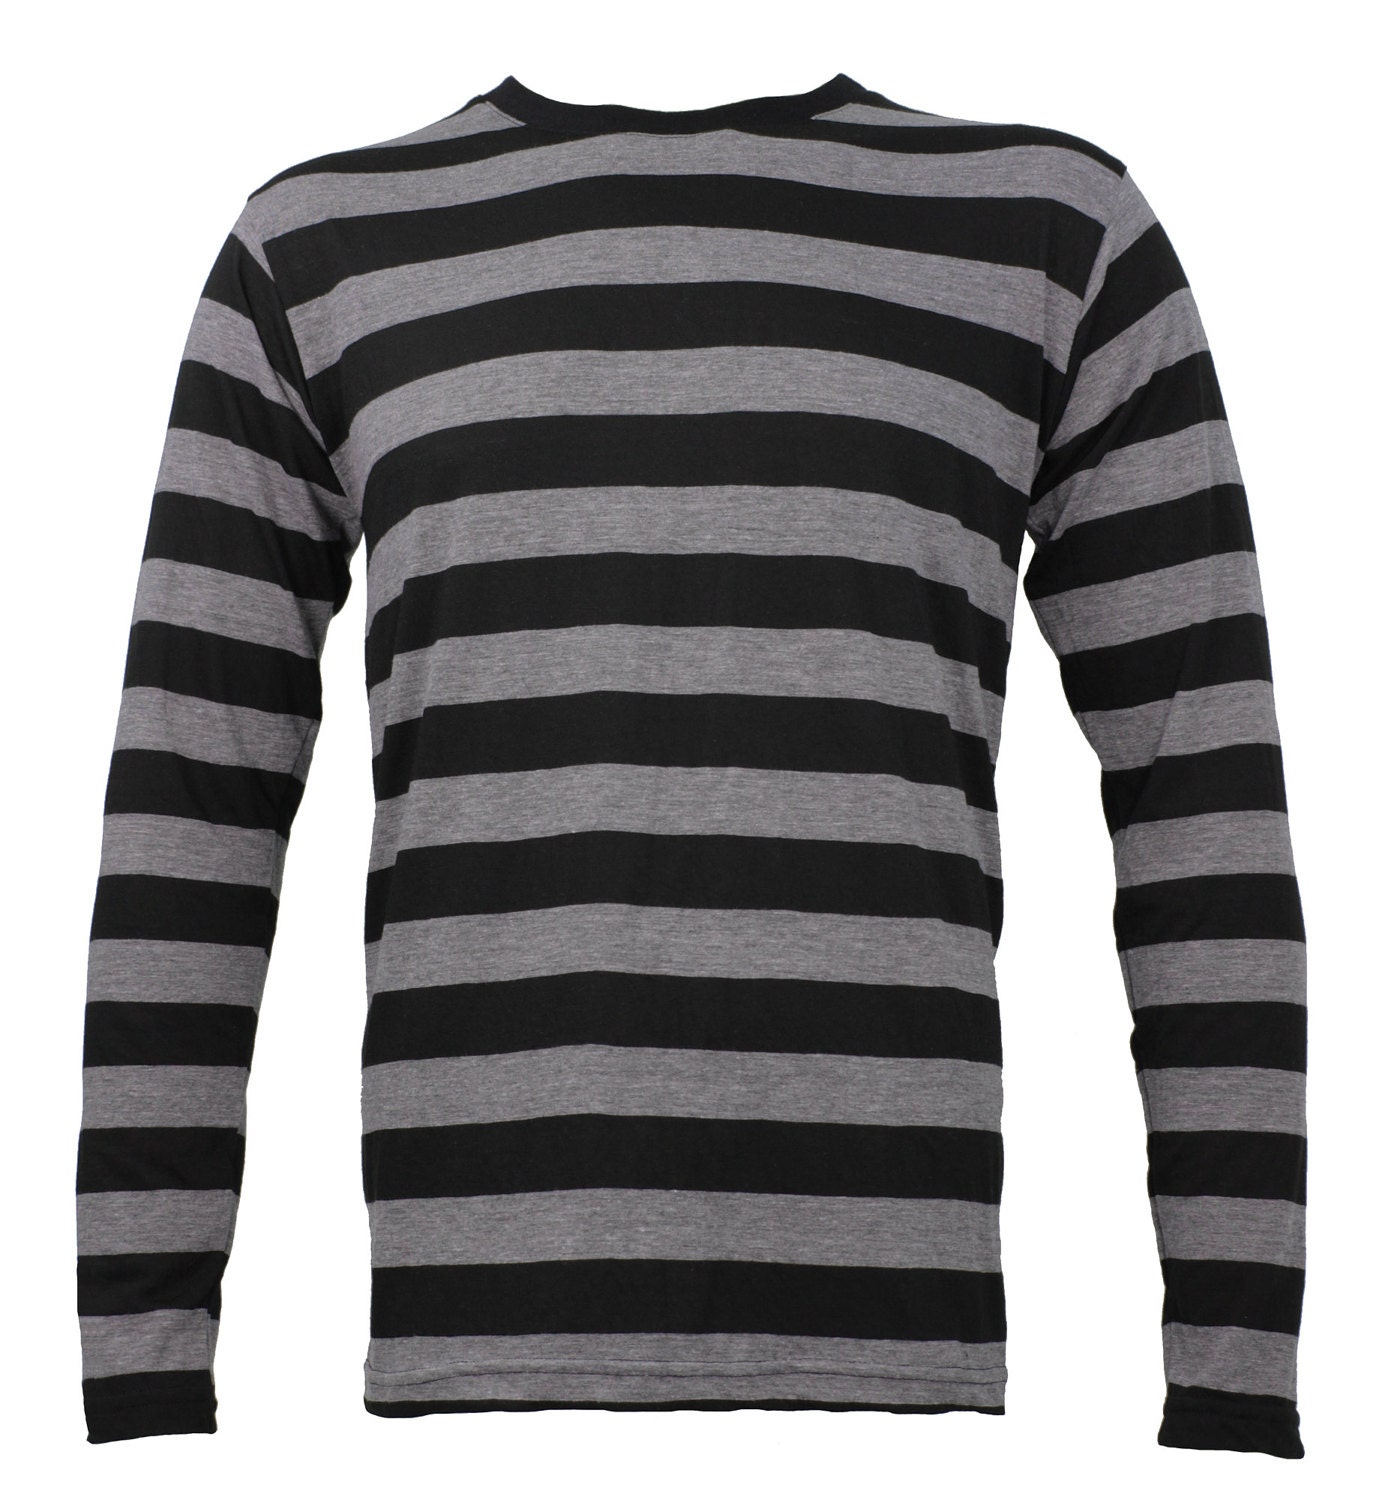 Long Sleeve Black & Heather Grey Striped Shirt XXL by SkirtStar